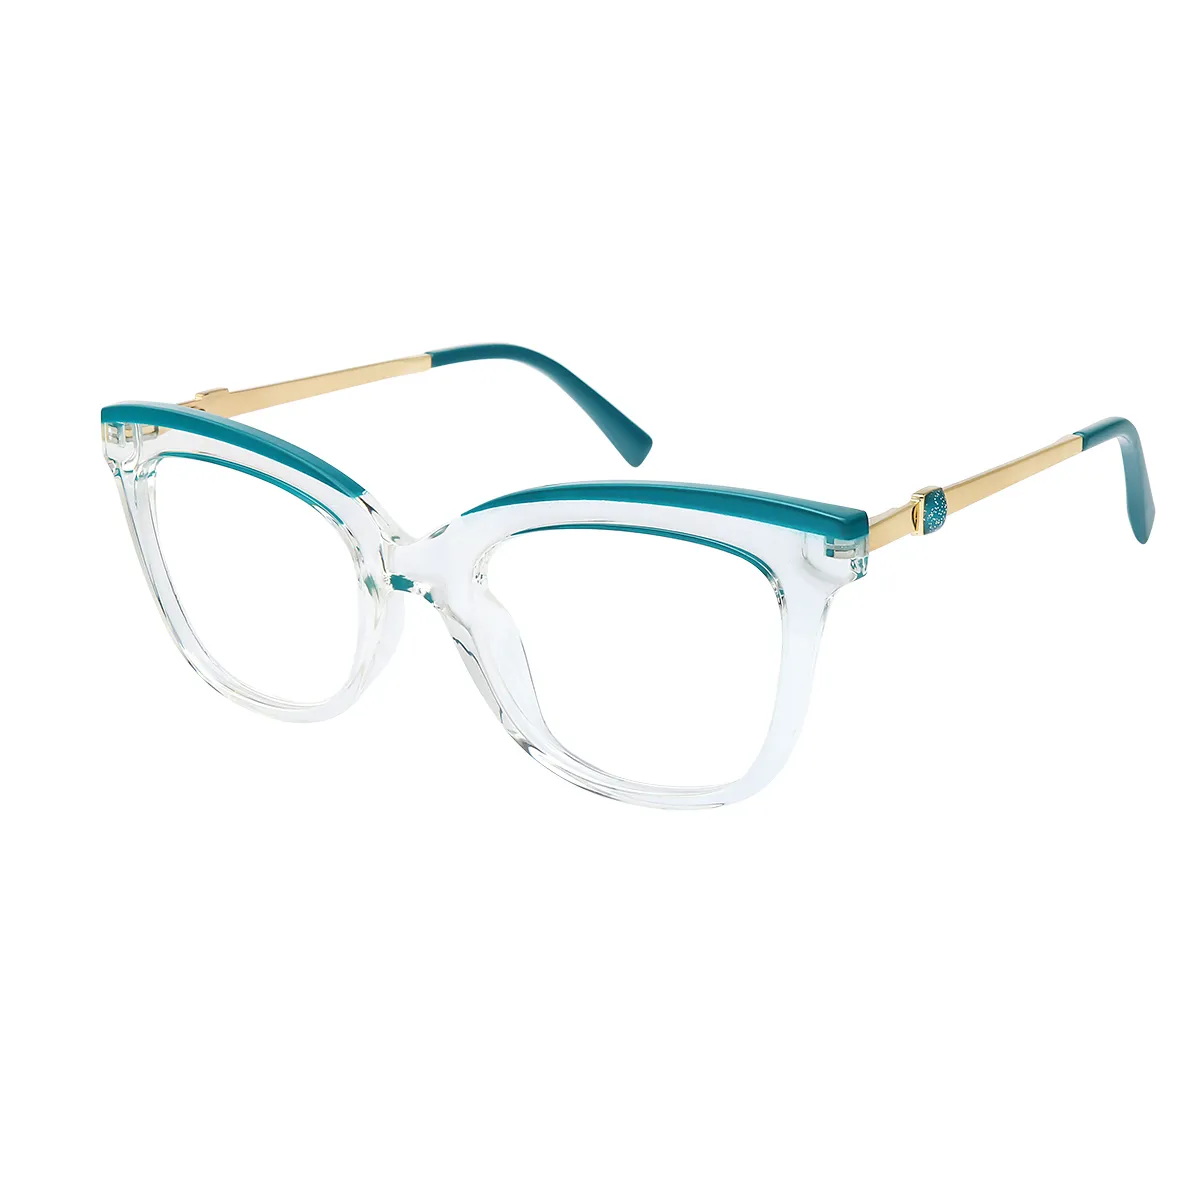 Savvy - Cat-eye Translucent-Green Glasses for Women